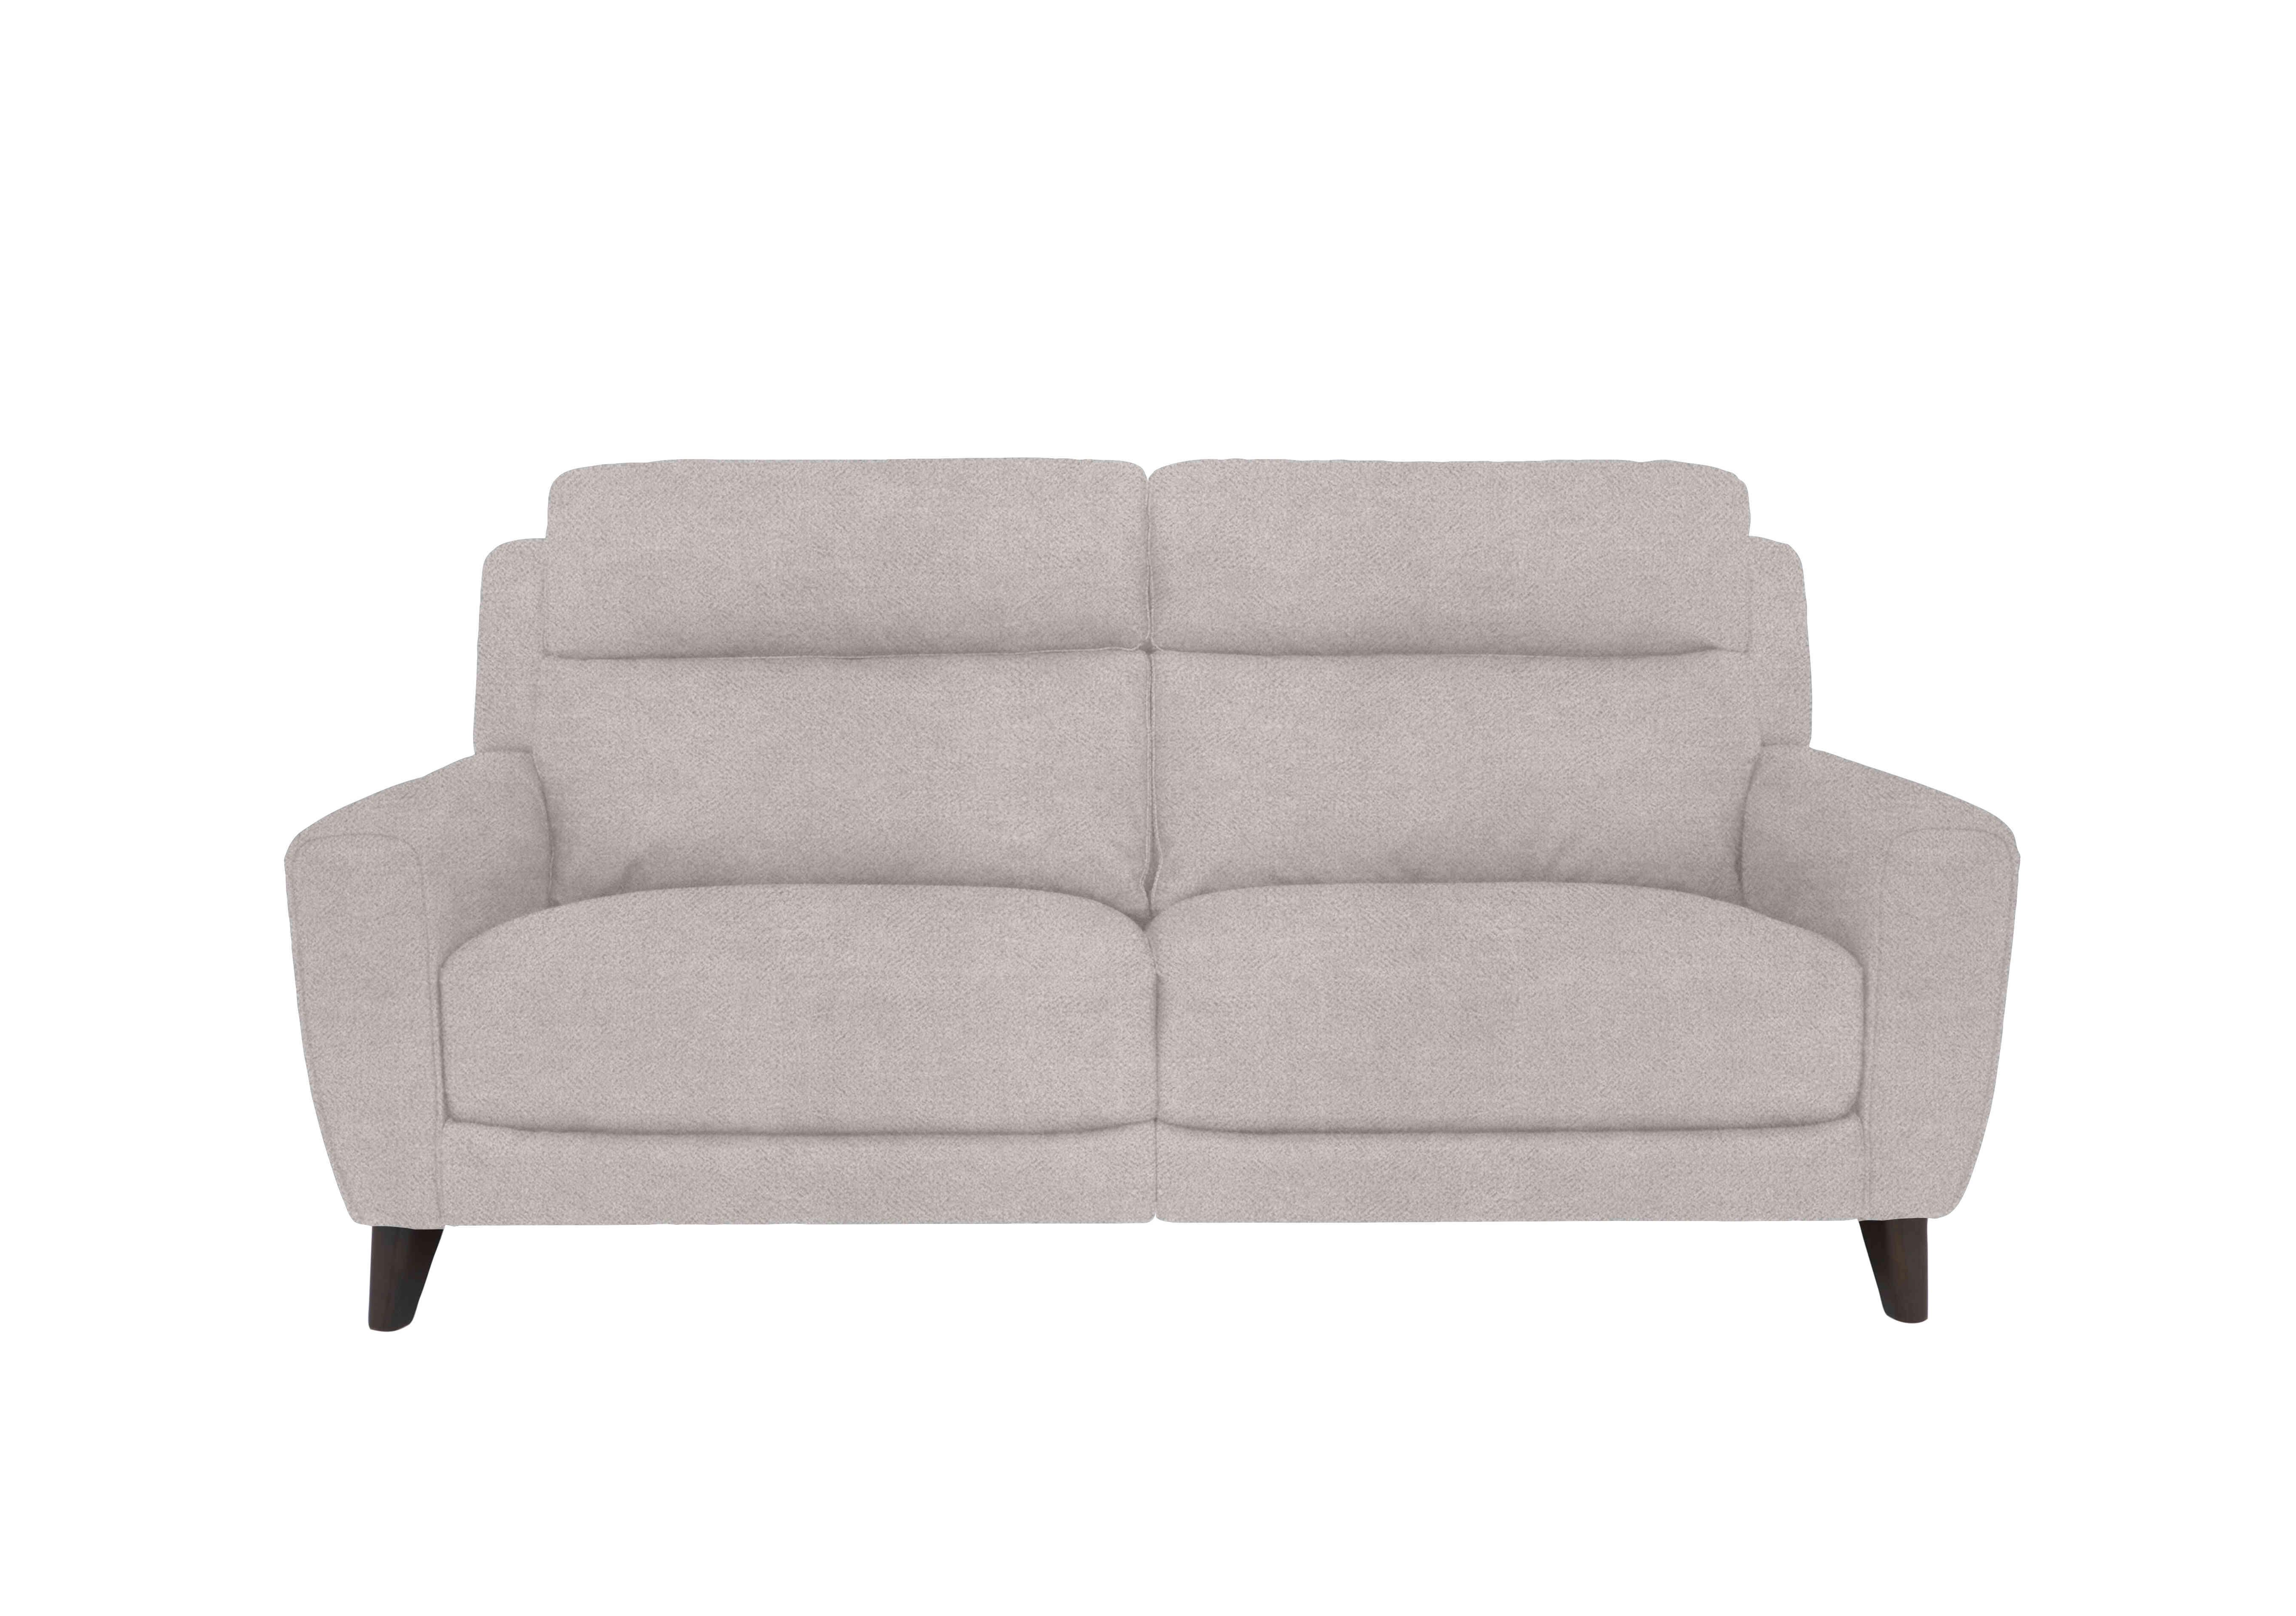 Zen 3 Seater Fabric Sofa in Fab-Meo-R23 Silver Grey on Furniture Village